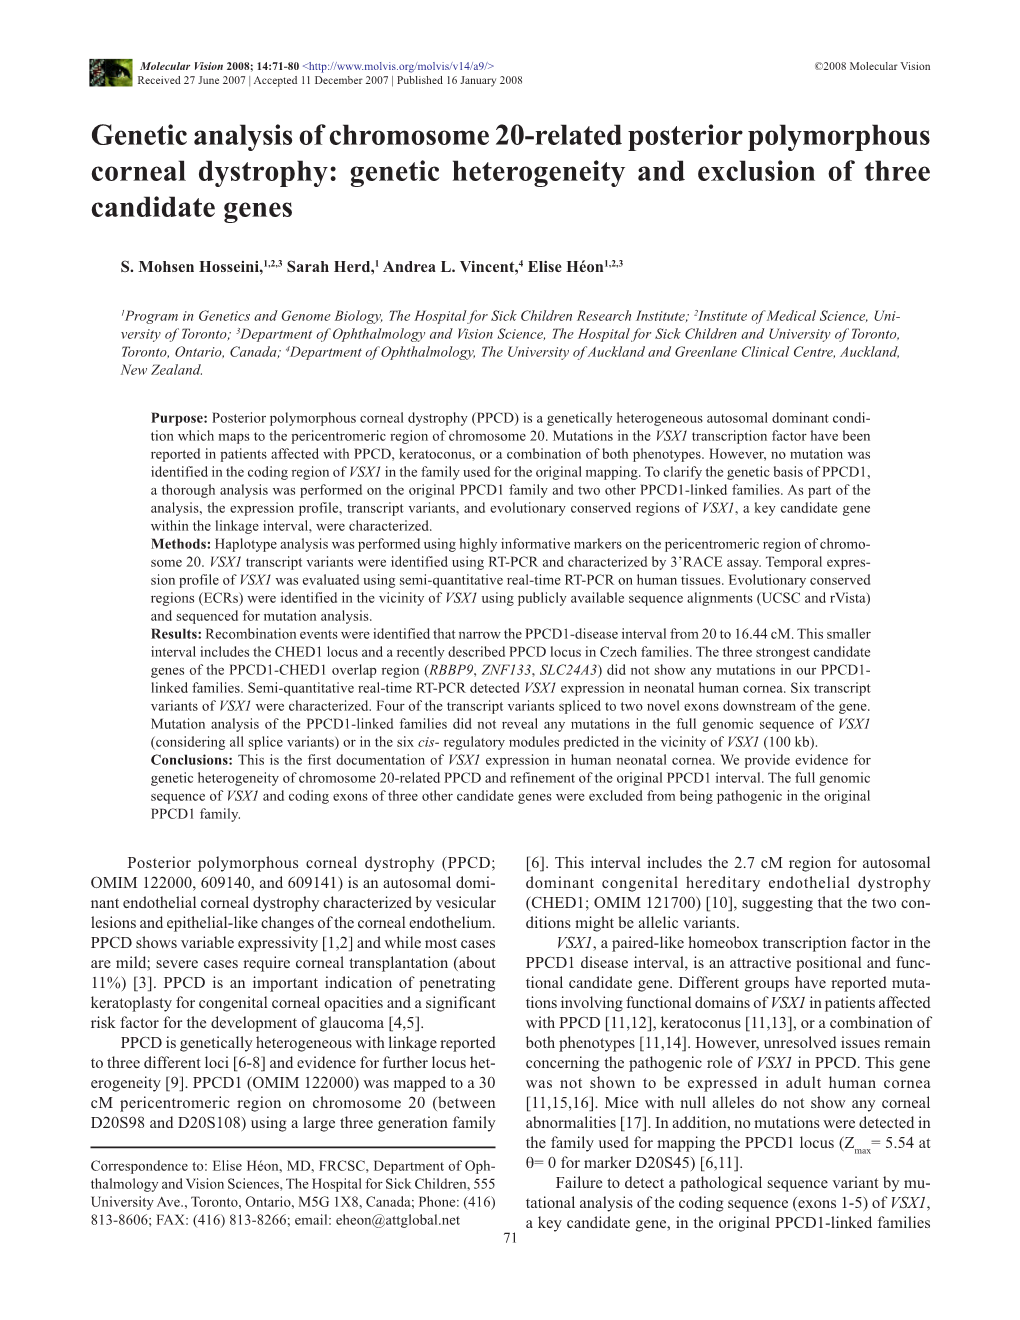 Genetic Heterogeneity and Exclusion of Three Candidate Genes